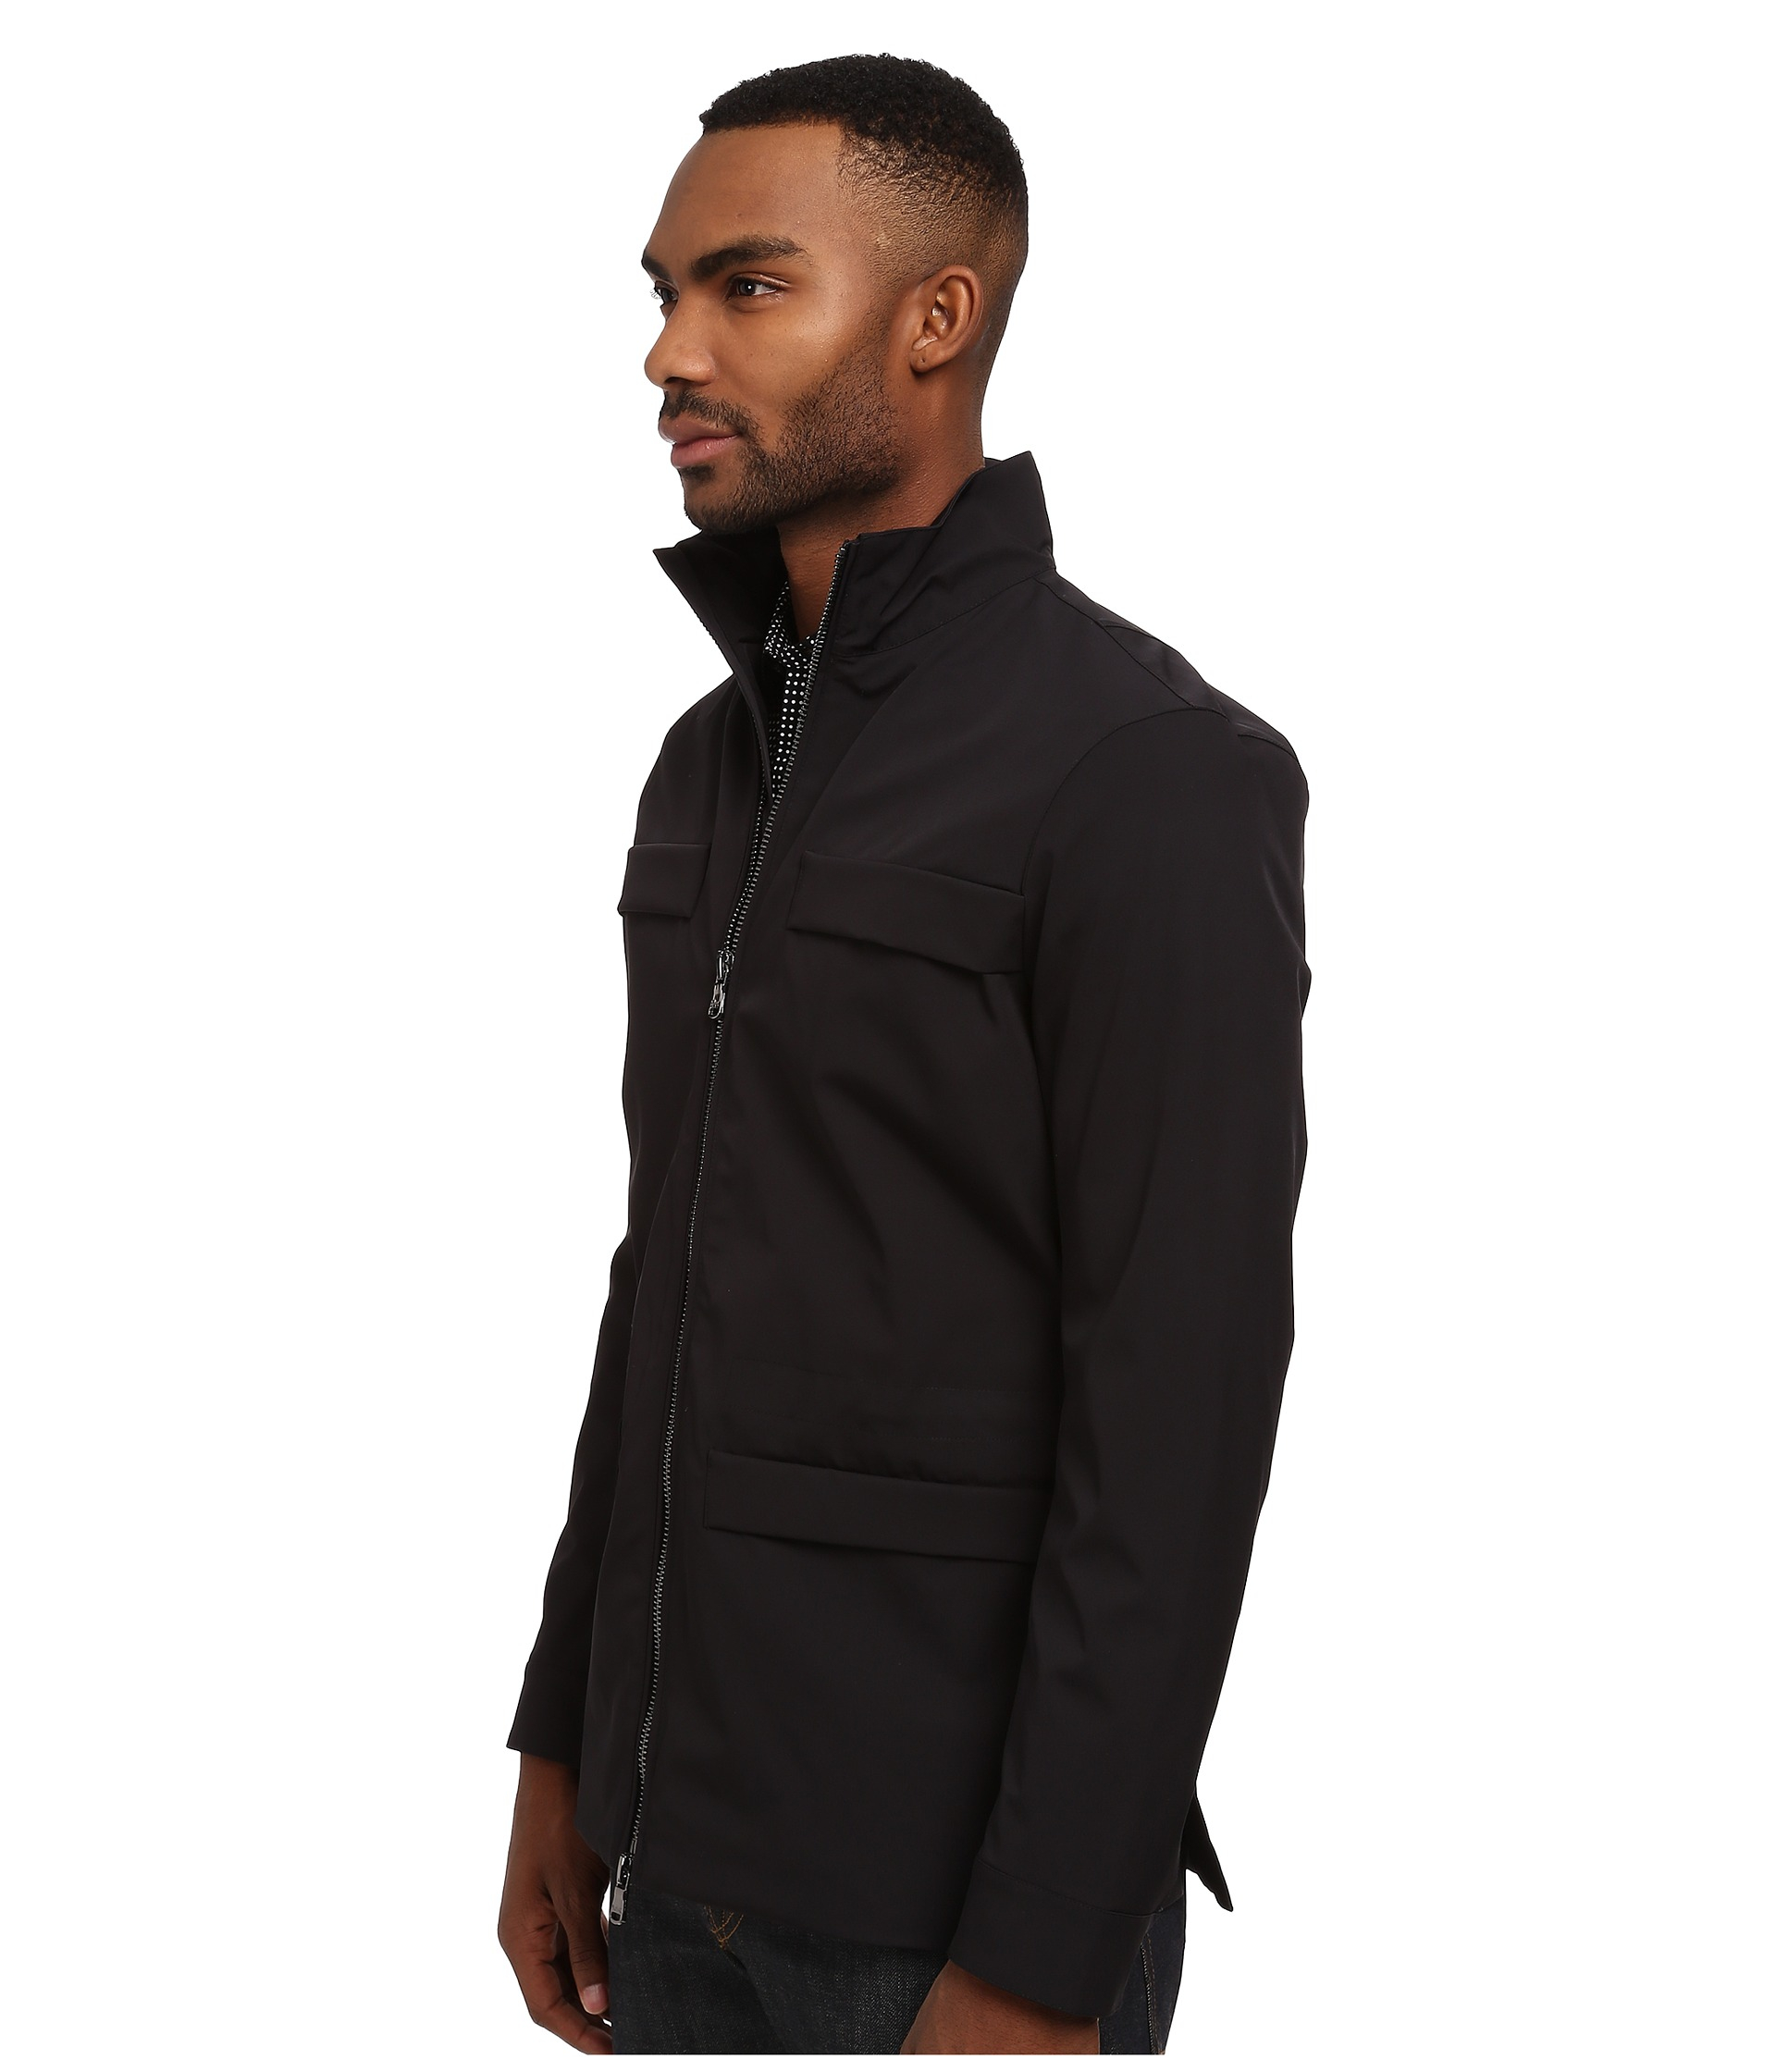 Michael Kors Utility Jacket in Black for Men - Lyst